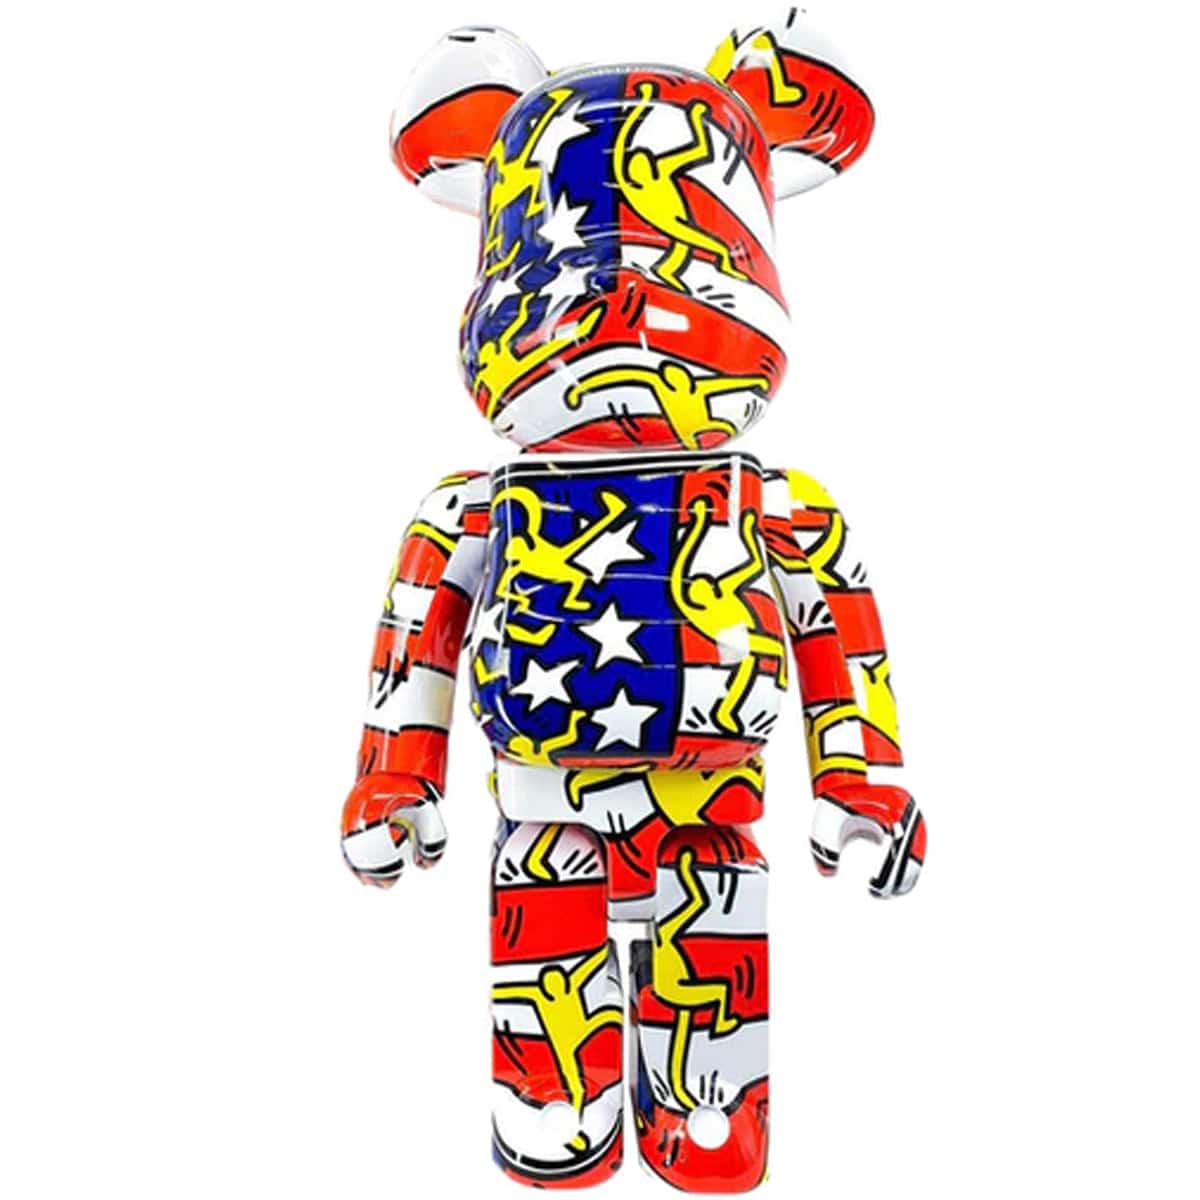 Keith Haring #7 USA Flag 1000% Bearbrick by Medicom Toys